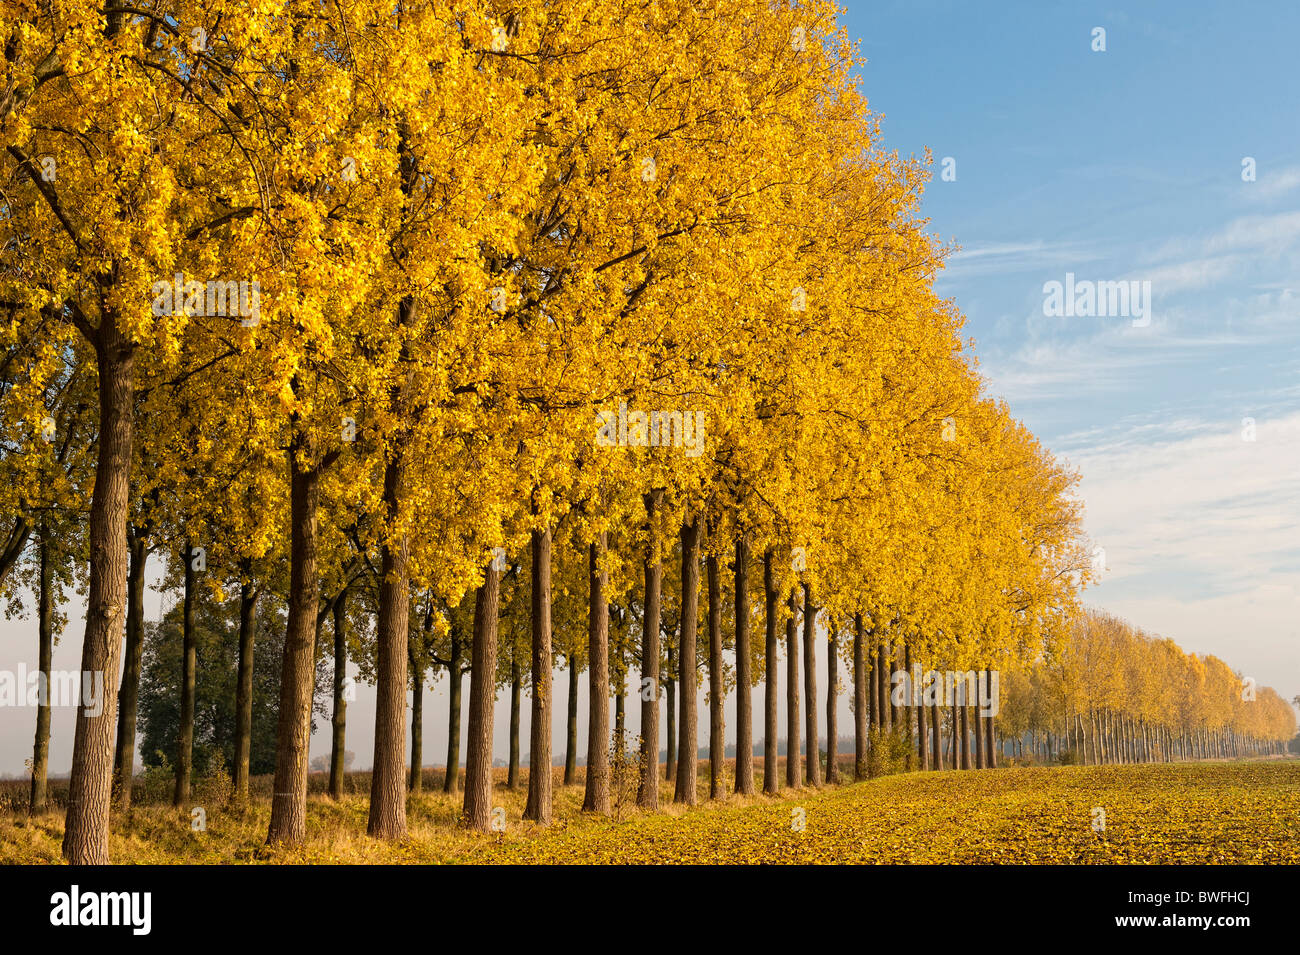 Canal de L’Espierres in autumn, Leers-Nord, Hainaut, Belgium Stock Photo